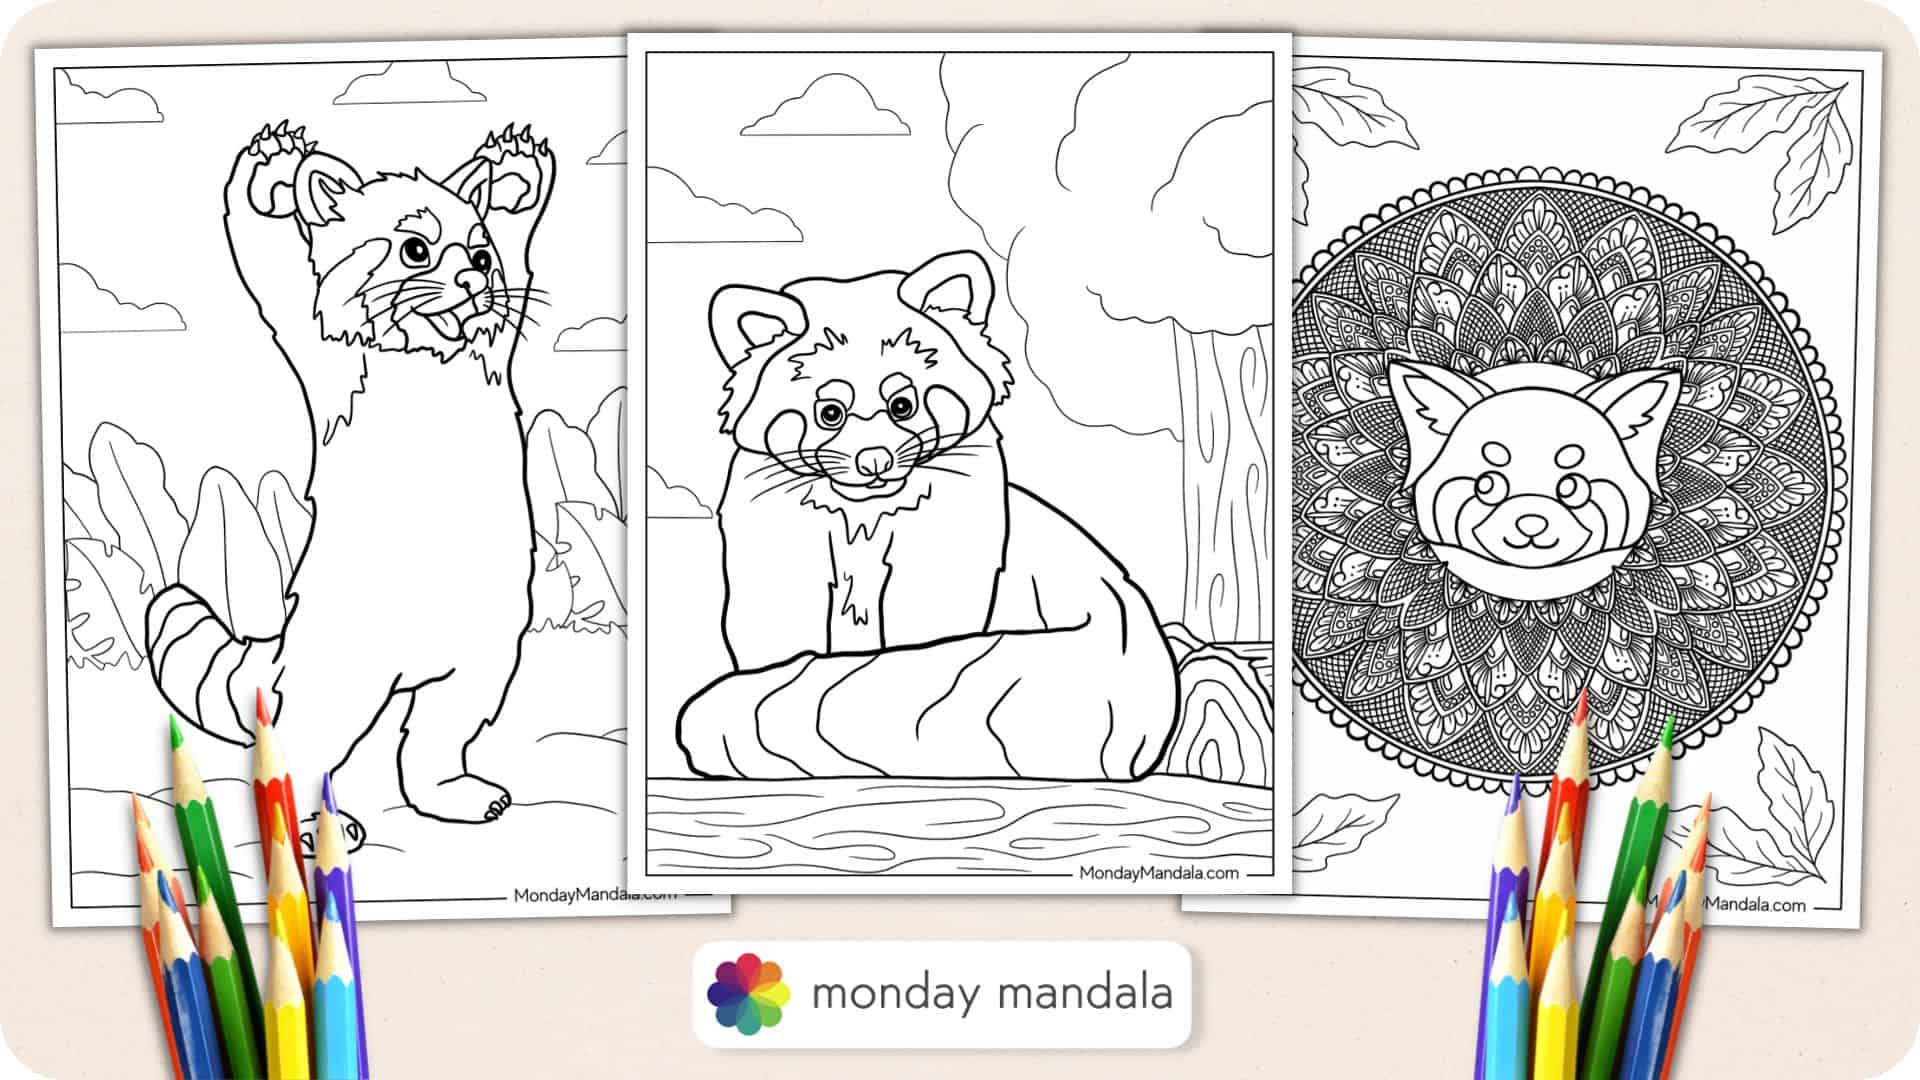 Red panda coloring pages free pdf printables